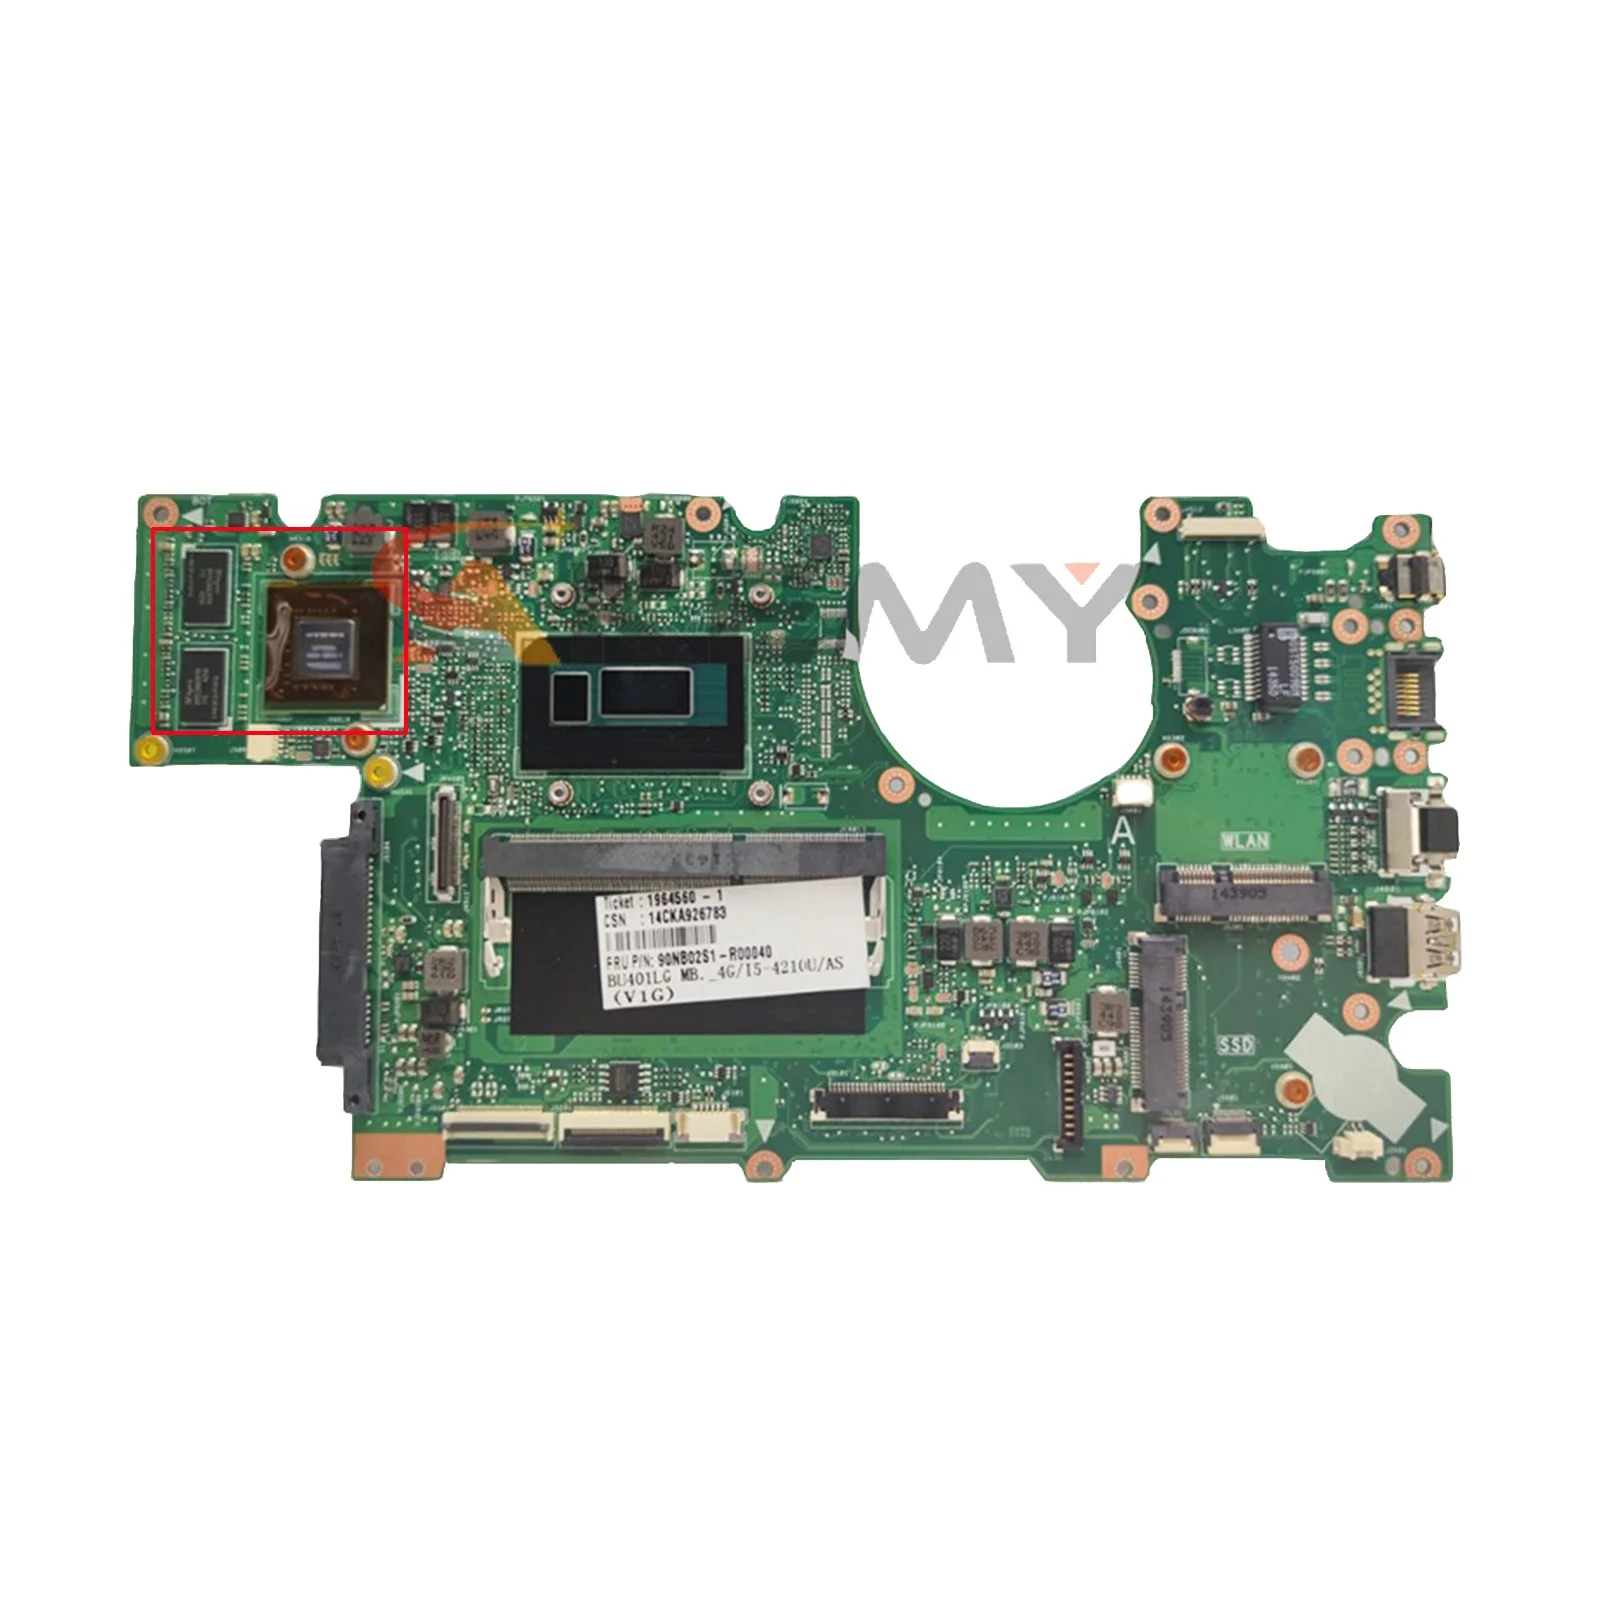 

BU401LAV Mainboard w/ I3 I5 I7 4th Gen CPU 4GB RAM for ASUS Notebook mainboard BU401L BU401LA BU401LG motherboard